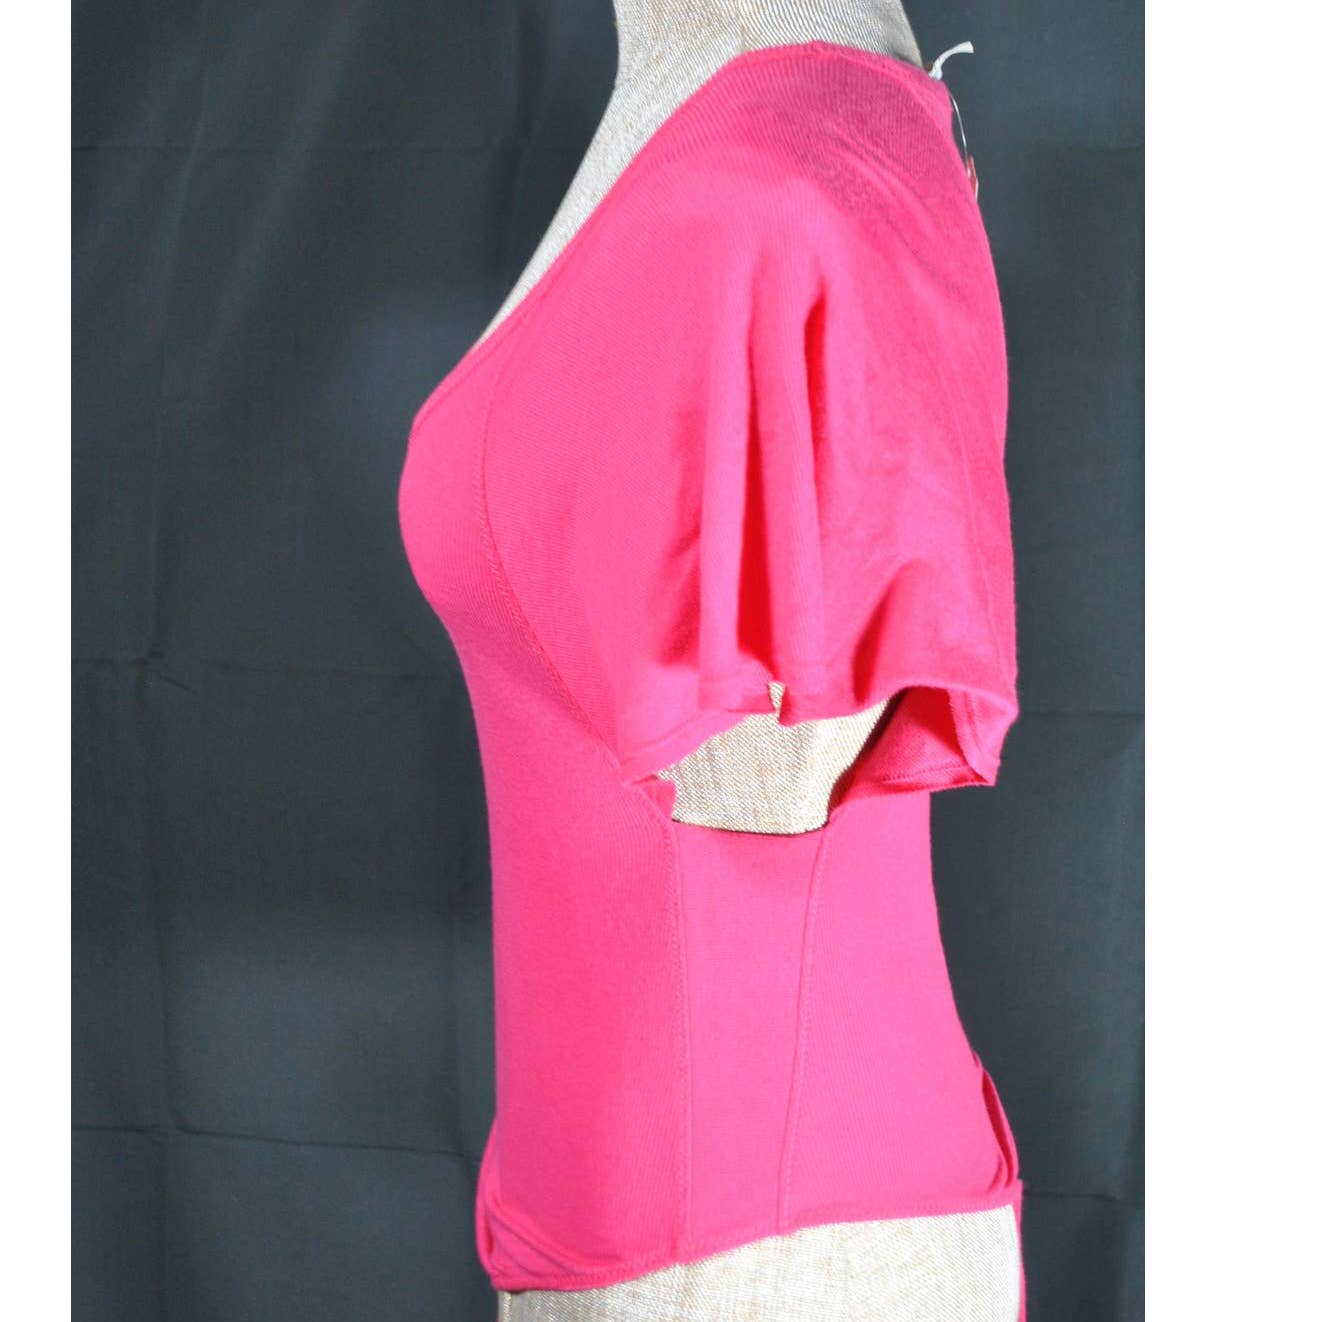 NWT Free People Intimately Pink Cap Sleeve Scoop Neck Bodysuit - XS